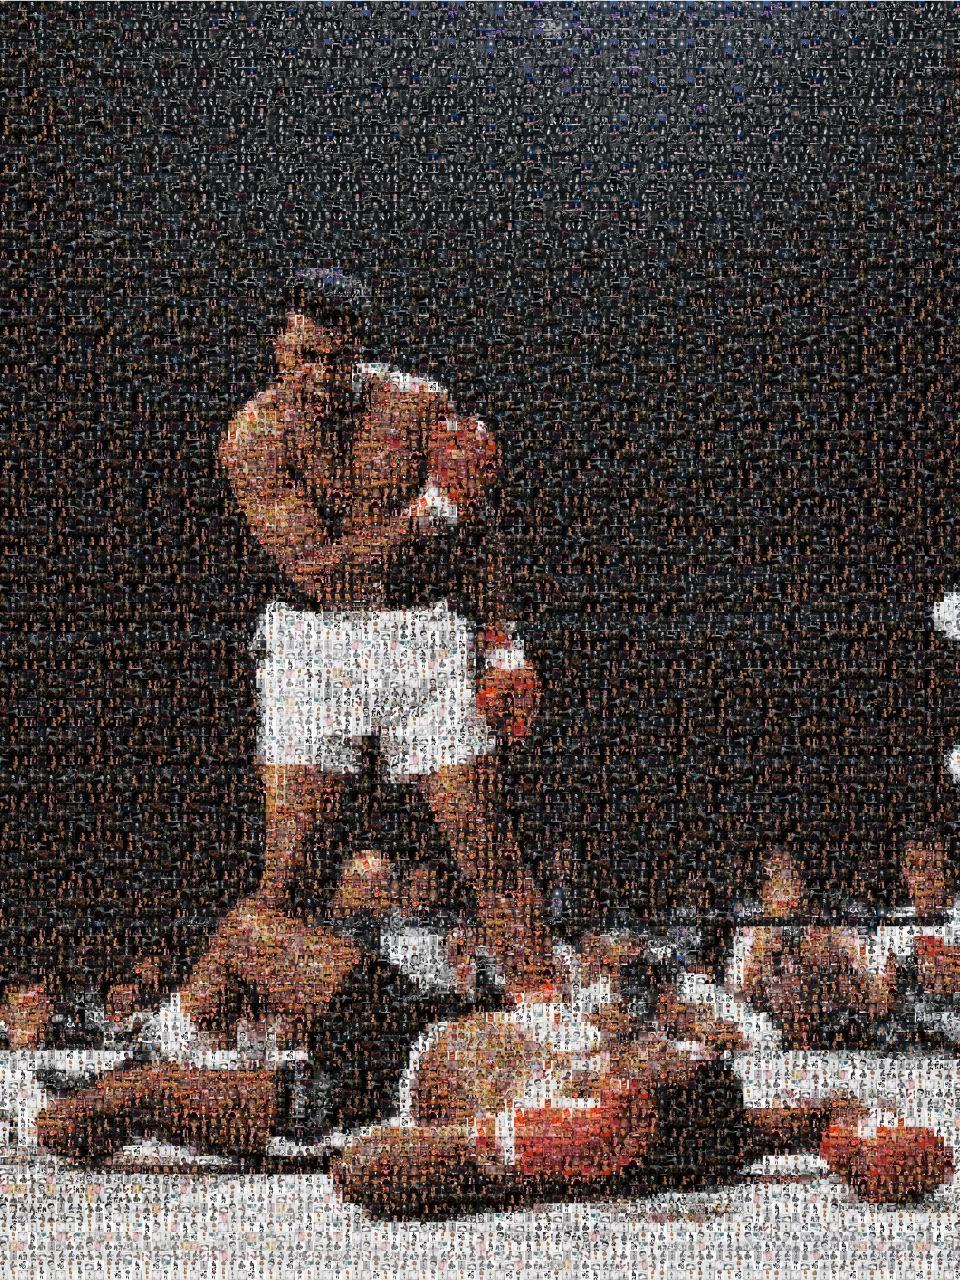 Destro Black and White Photograph - "Ali" Muhammad Ali Portrait 24x36  Photomosaic Photography Pop Art Photograph